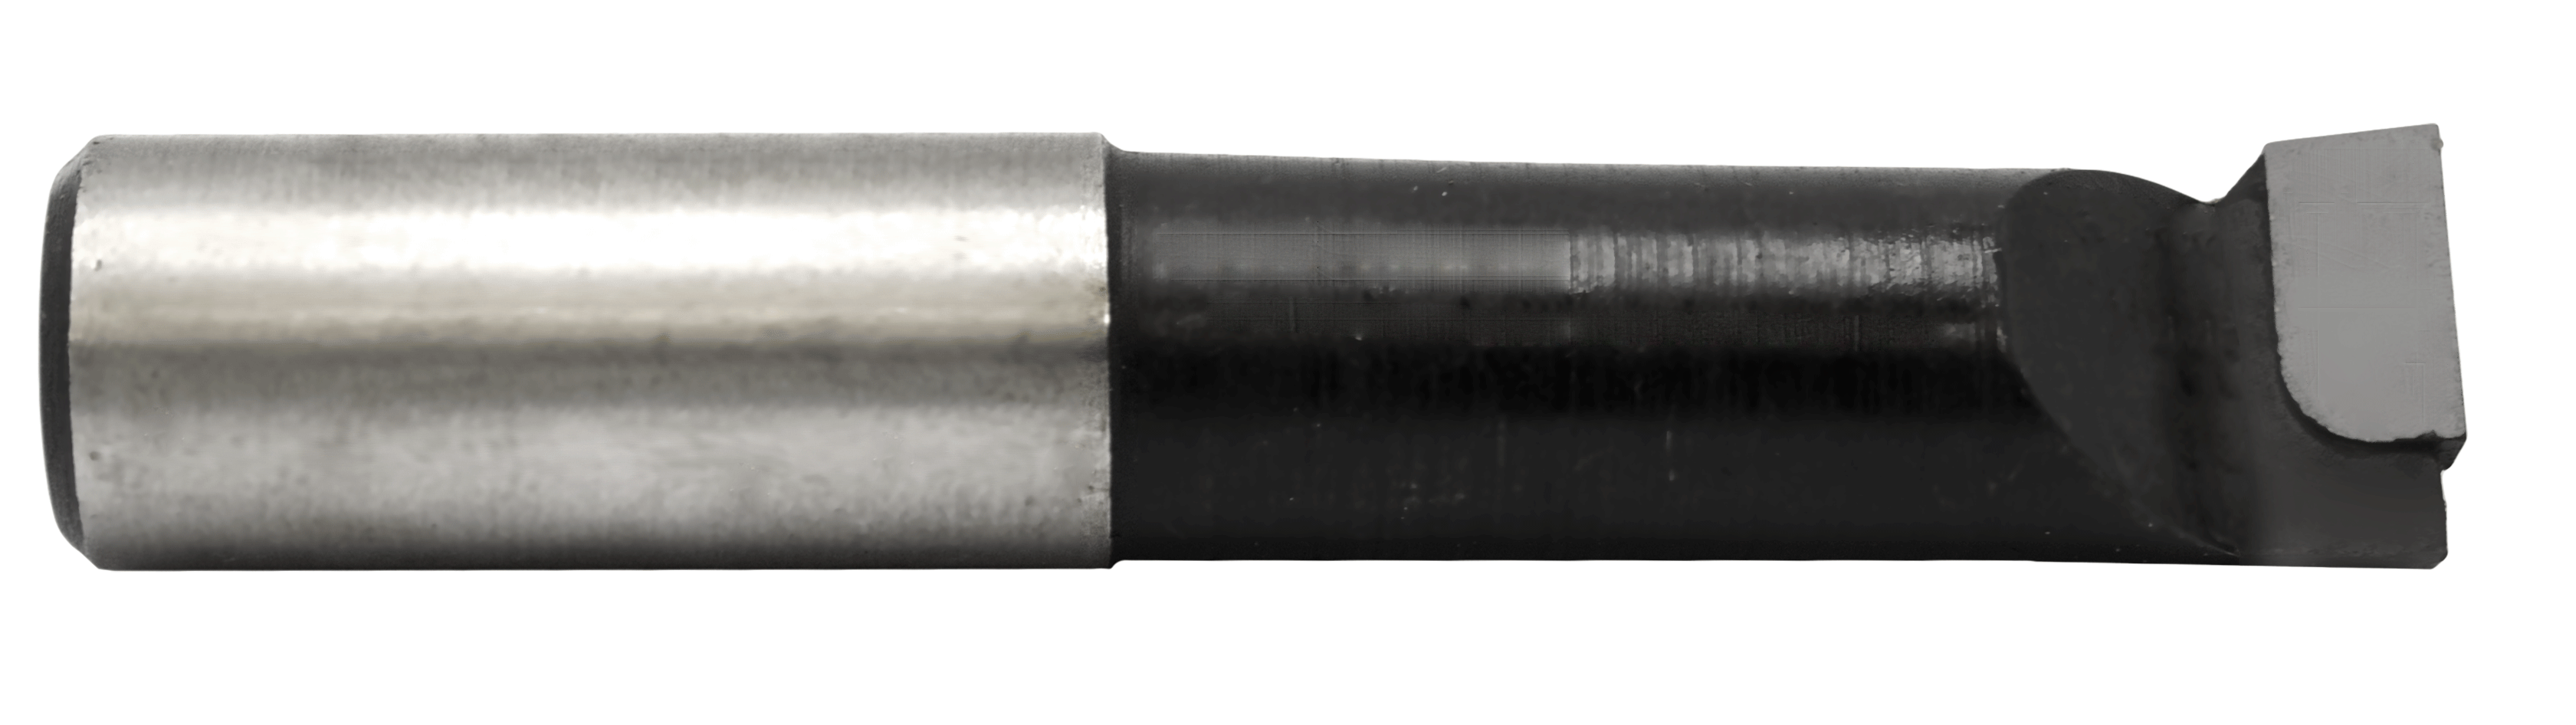 Super-Bore 16mm" C-2 for Cast Iron Applications